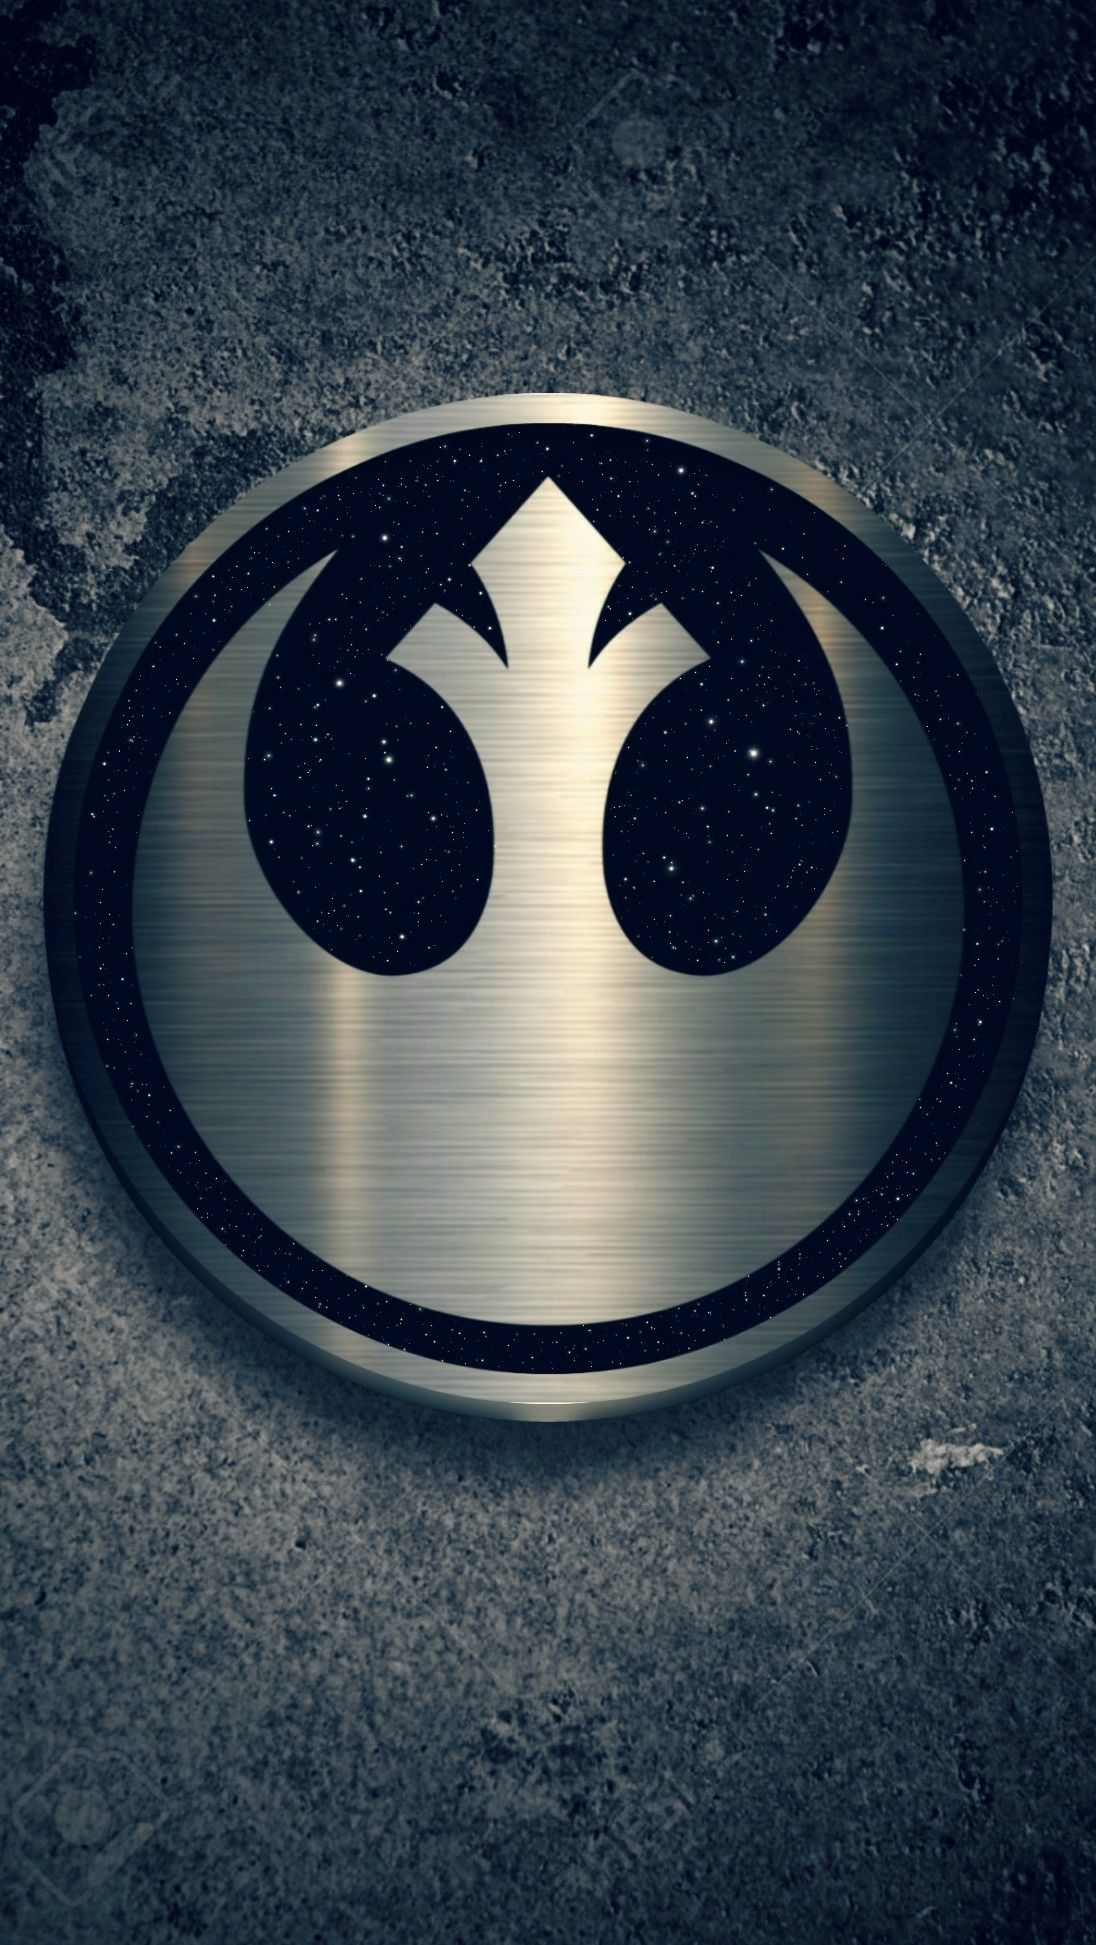 1096x1945 Star Wars Rebel Logo Wallpapers Top Free Star Wars Rebel Logo Backgrounds